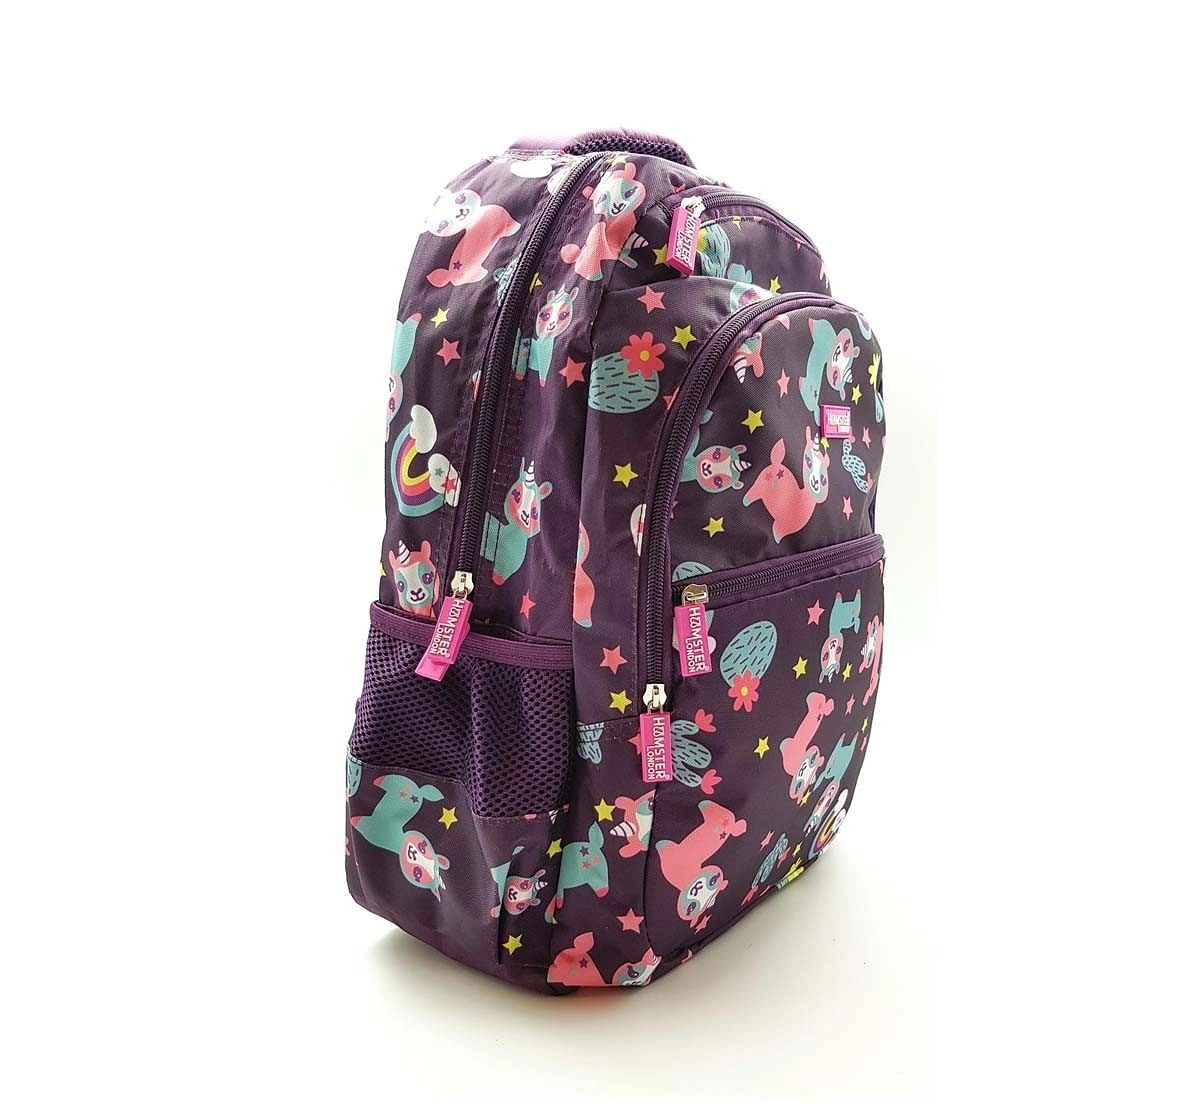 Hamster London Llama Backpack Travel for Kids Age 3Y+ (Purple)